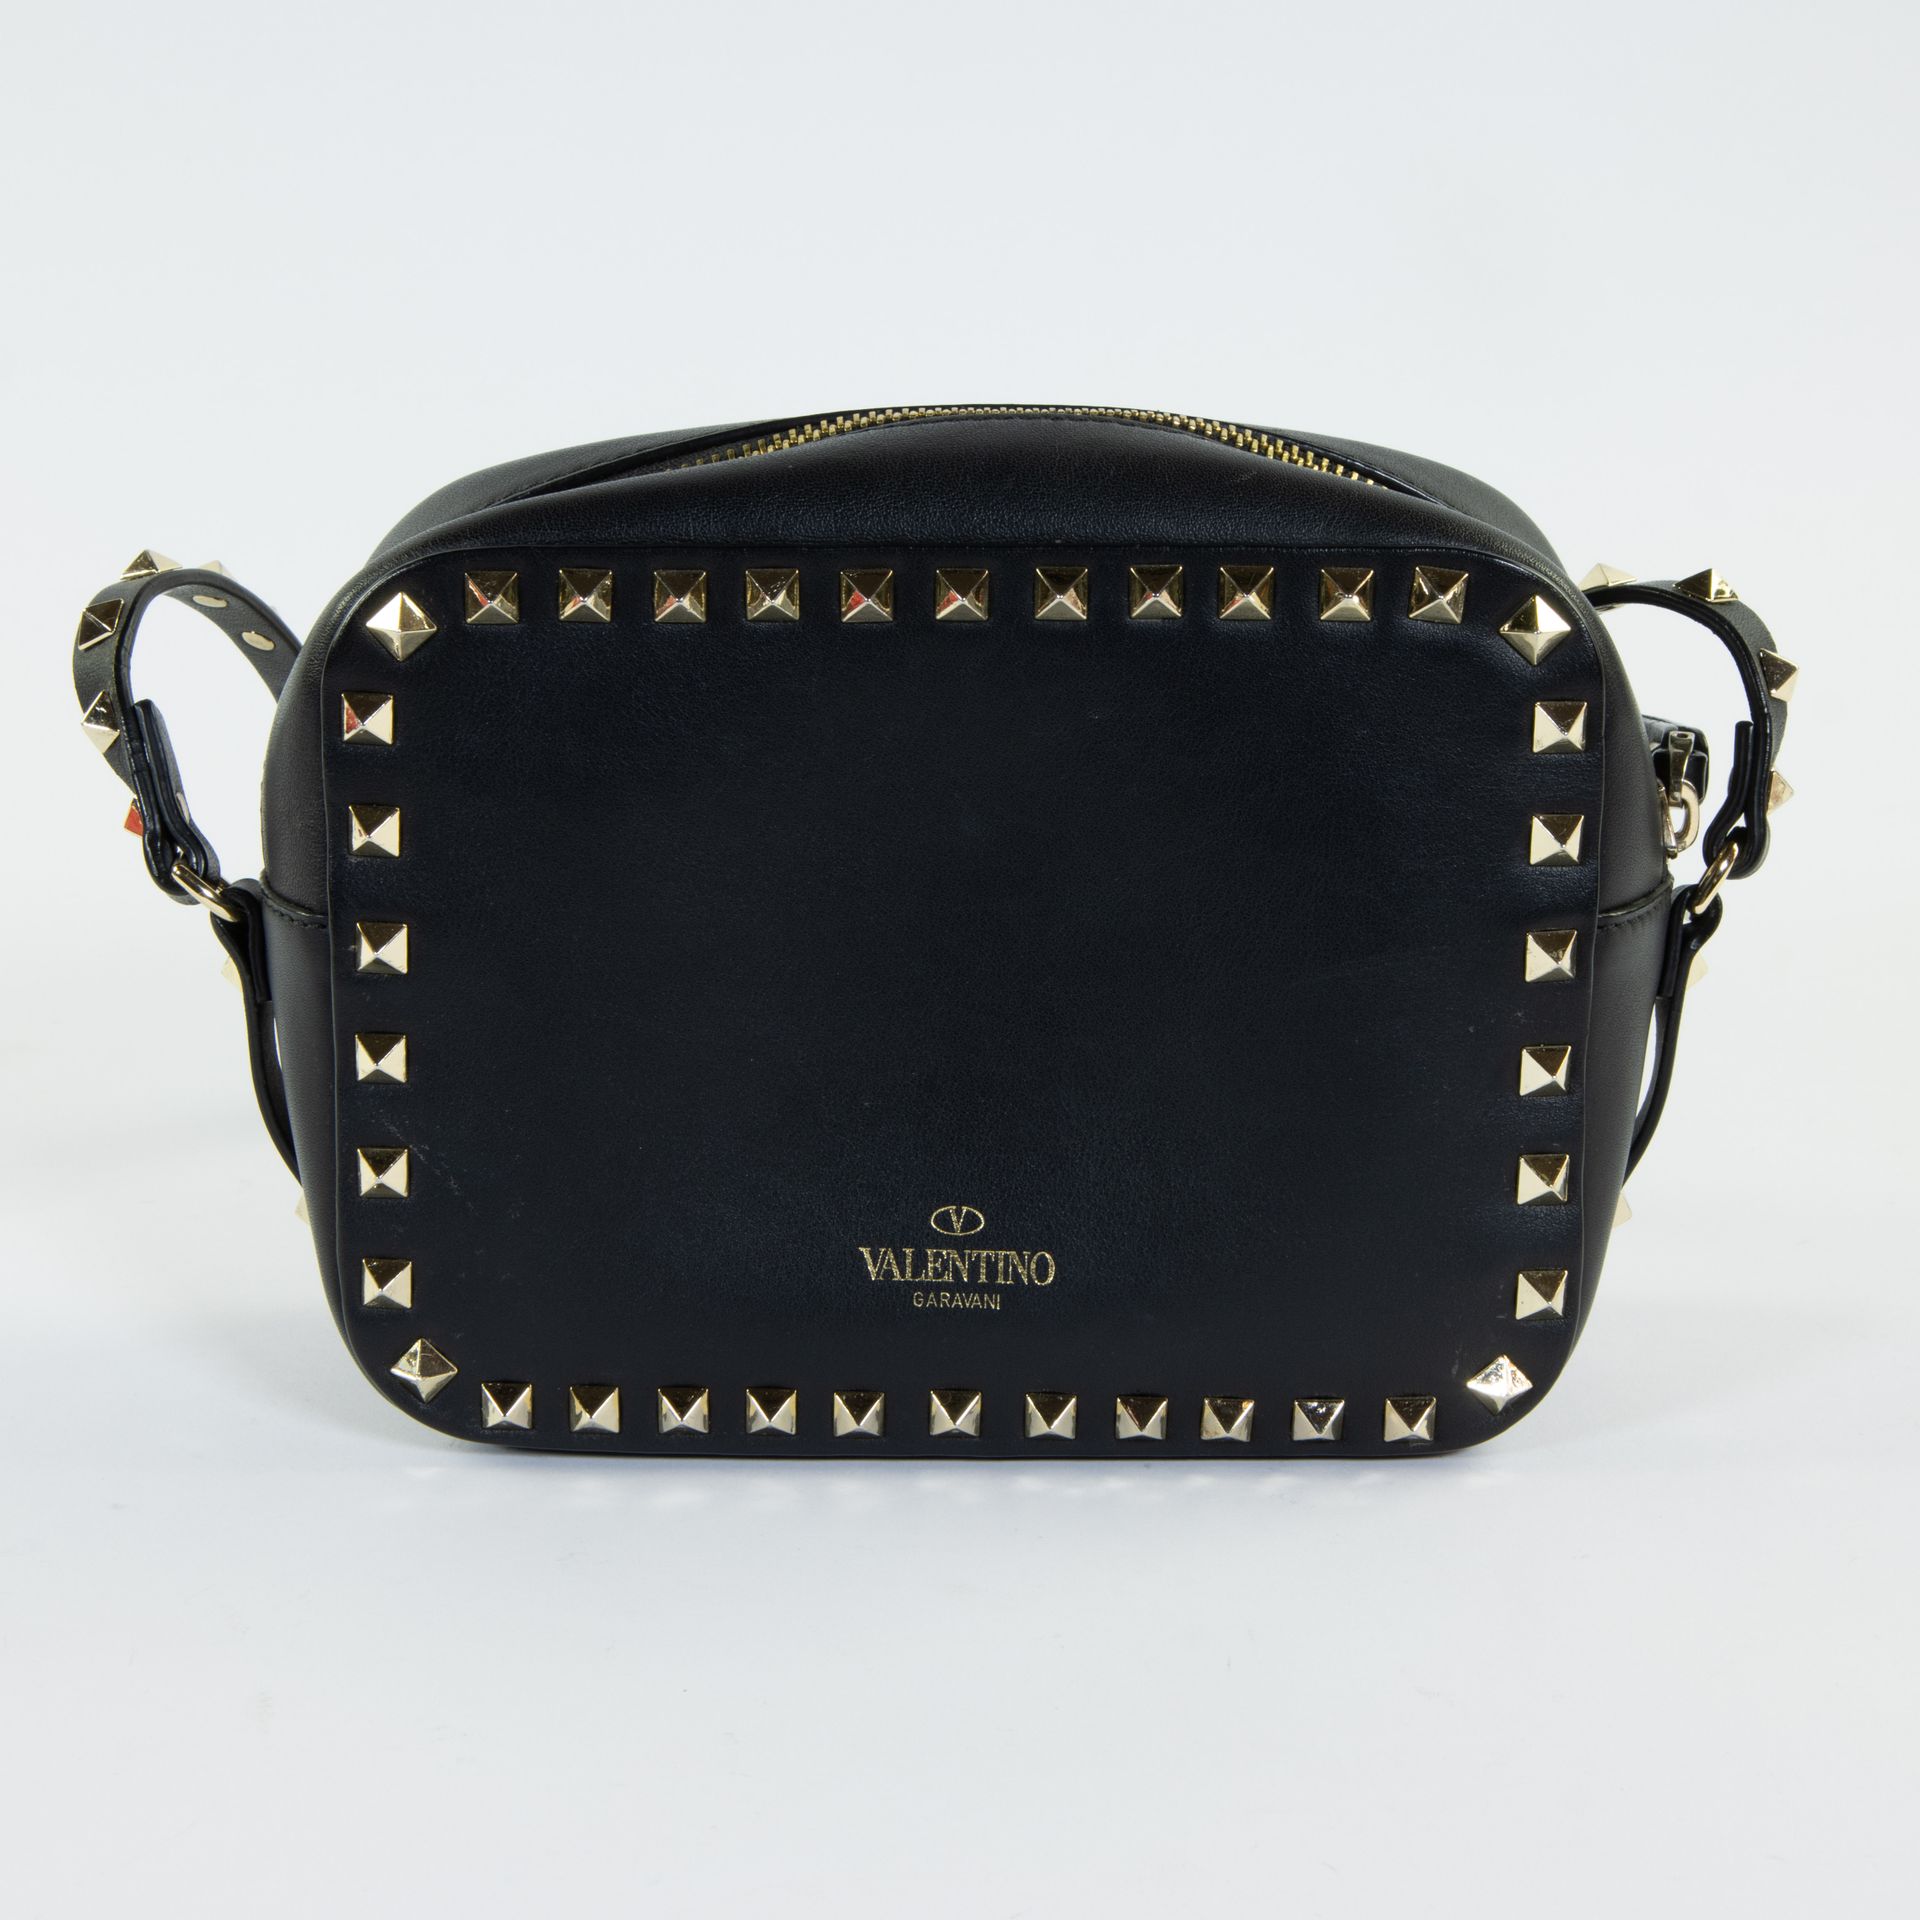 Null Leather vintage handbag Valentino
Lederen vintage handtas Valentino
16 x 22&hellip;